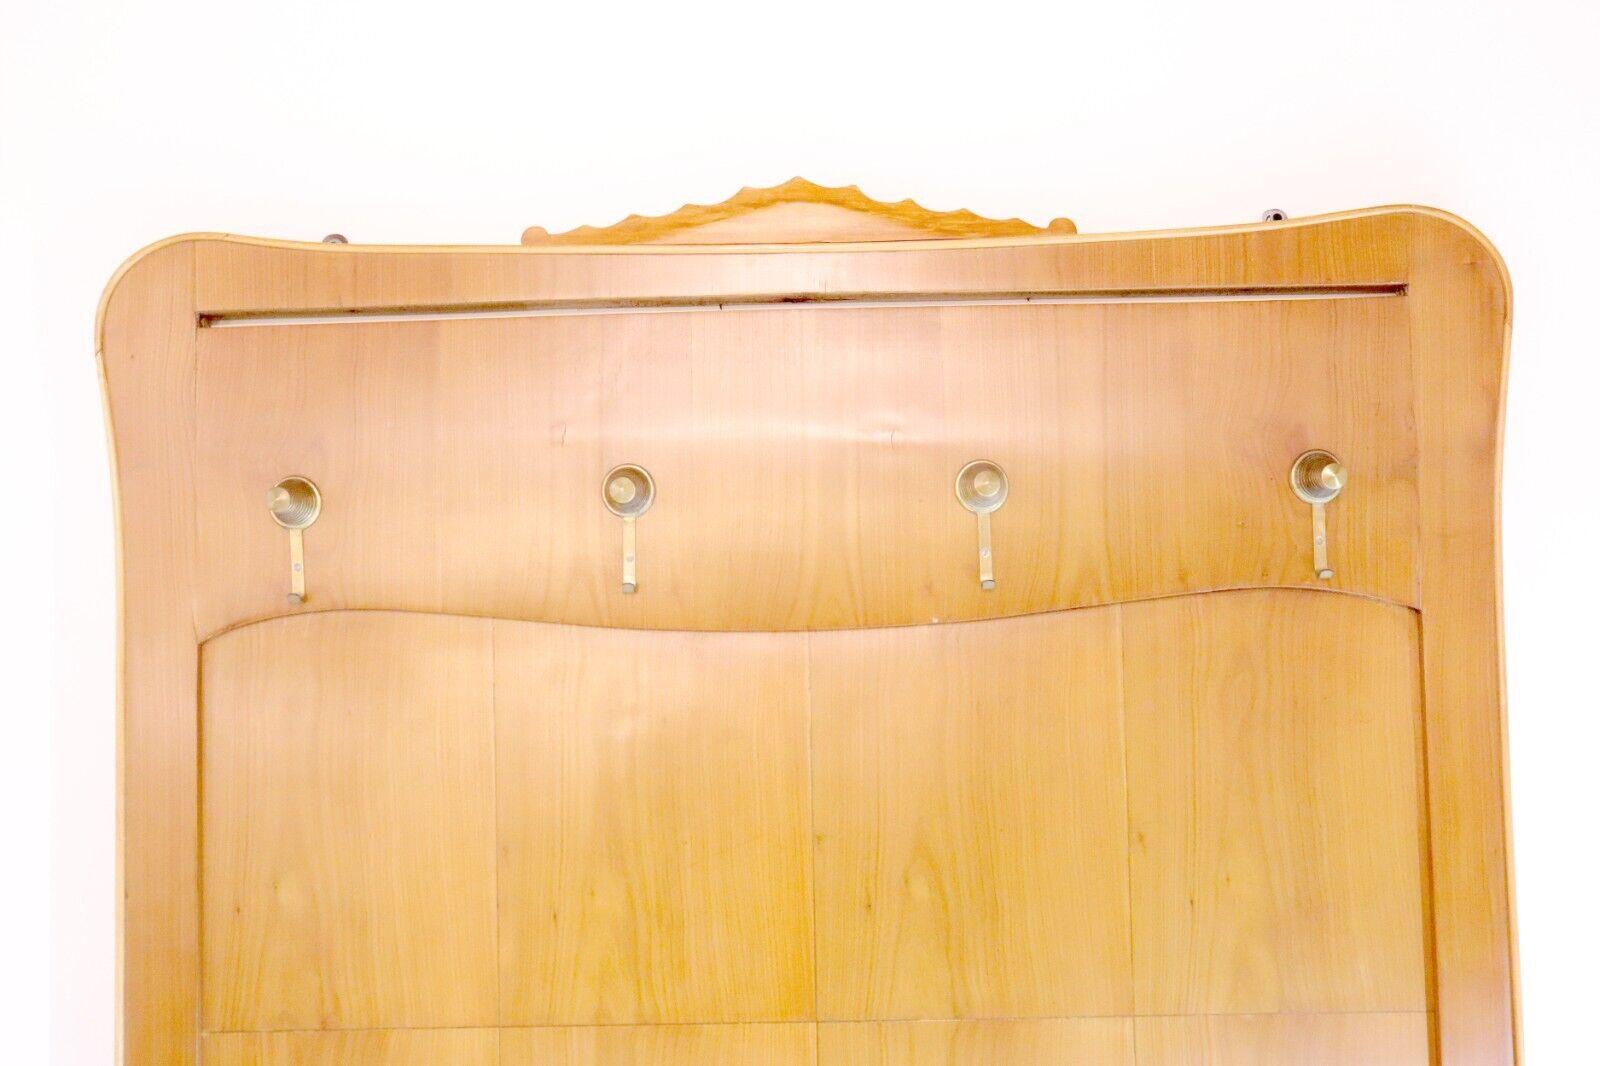 A beautiful 1950's Italian cherry wood wall panel / coat rack with brass hooks.